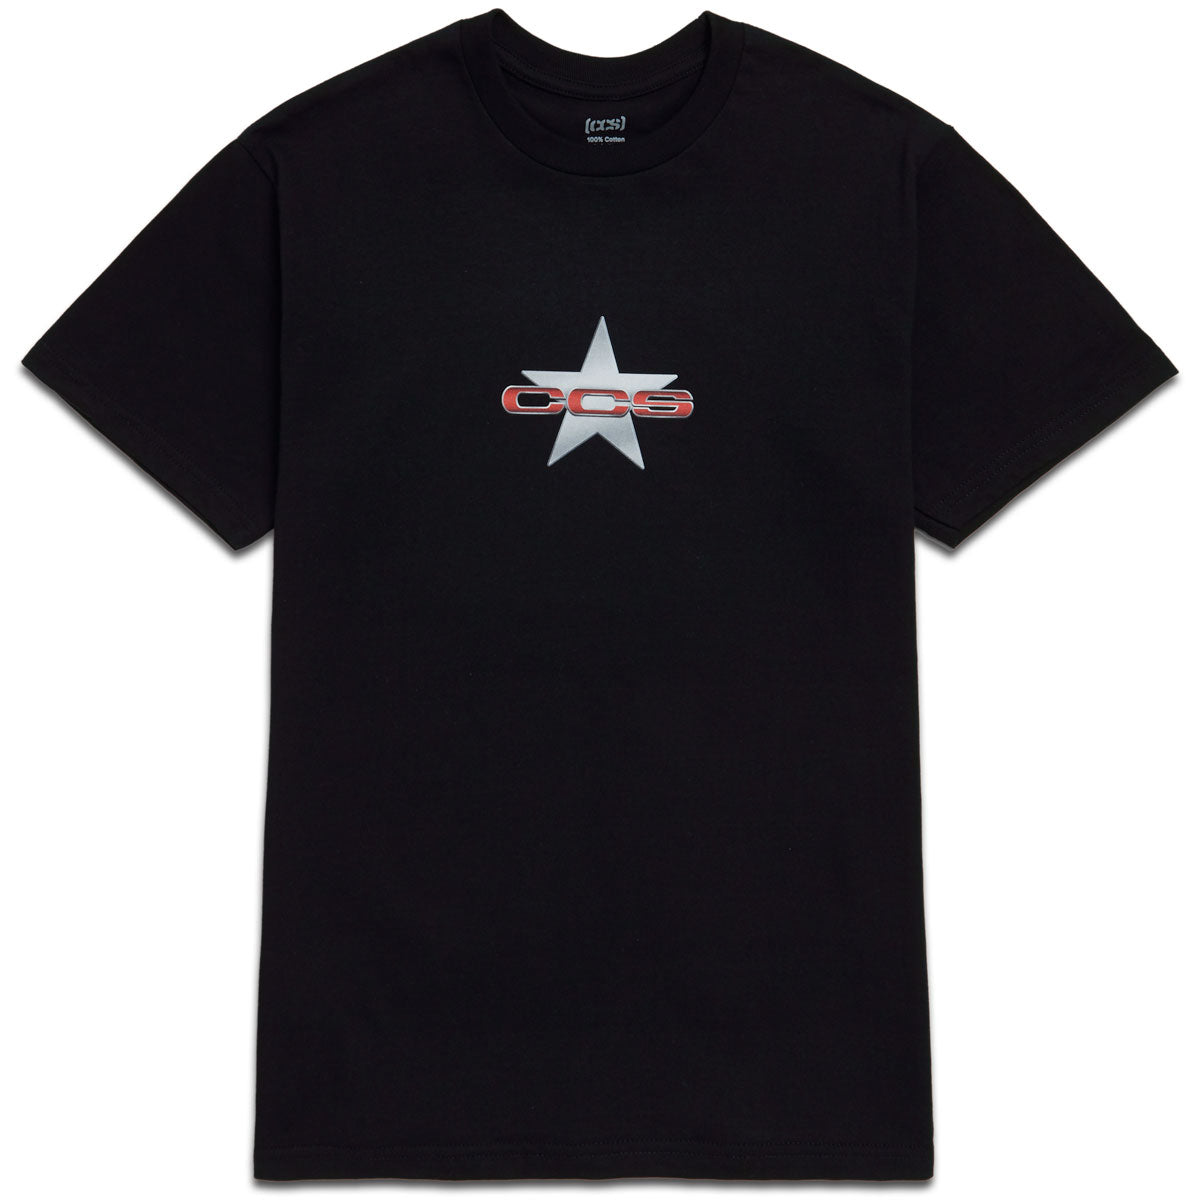 CCS 97 Star T-Shirt - Black - XL image 1